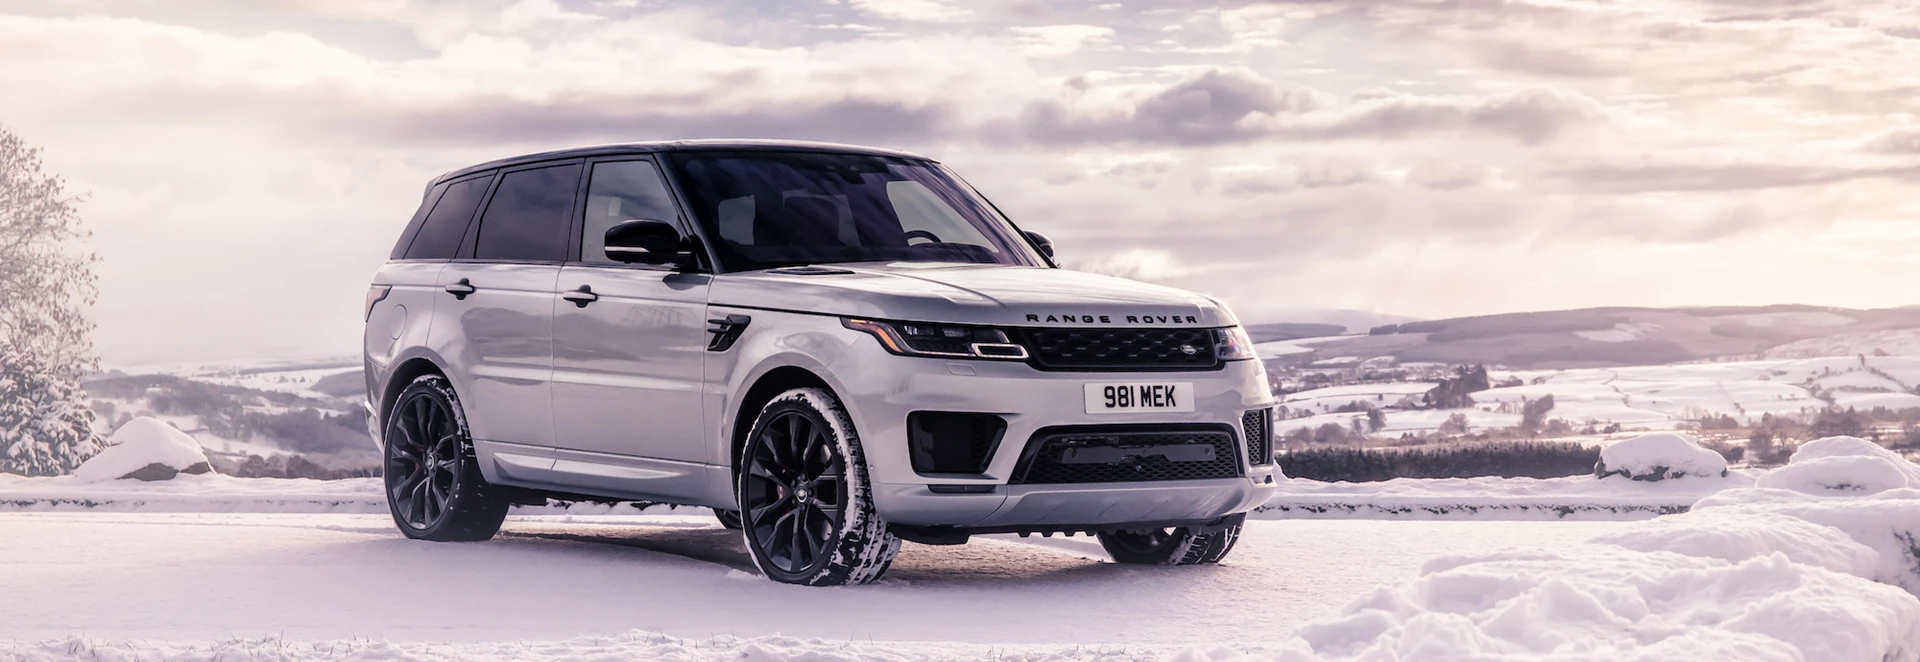 High-performance Range Rover Sport HST joins line-up